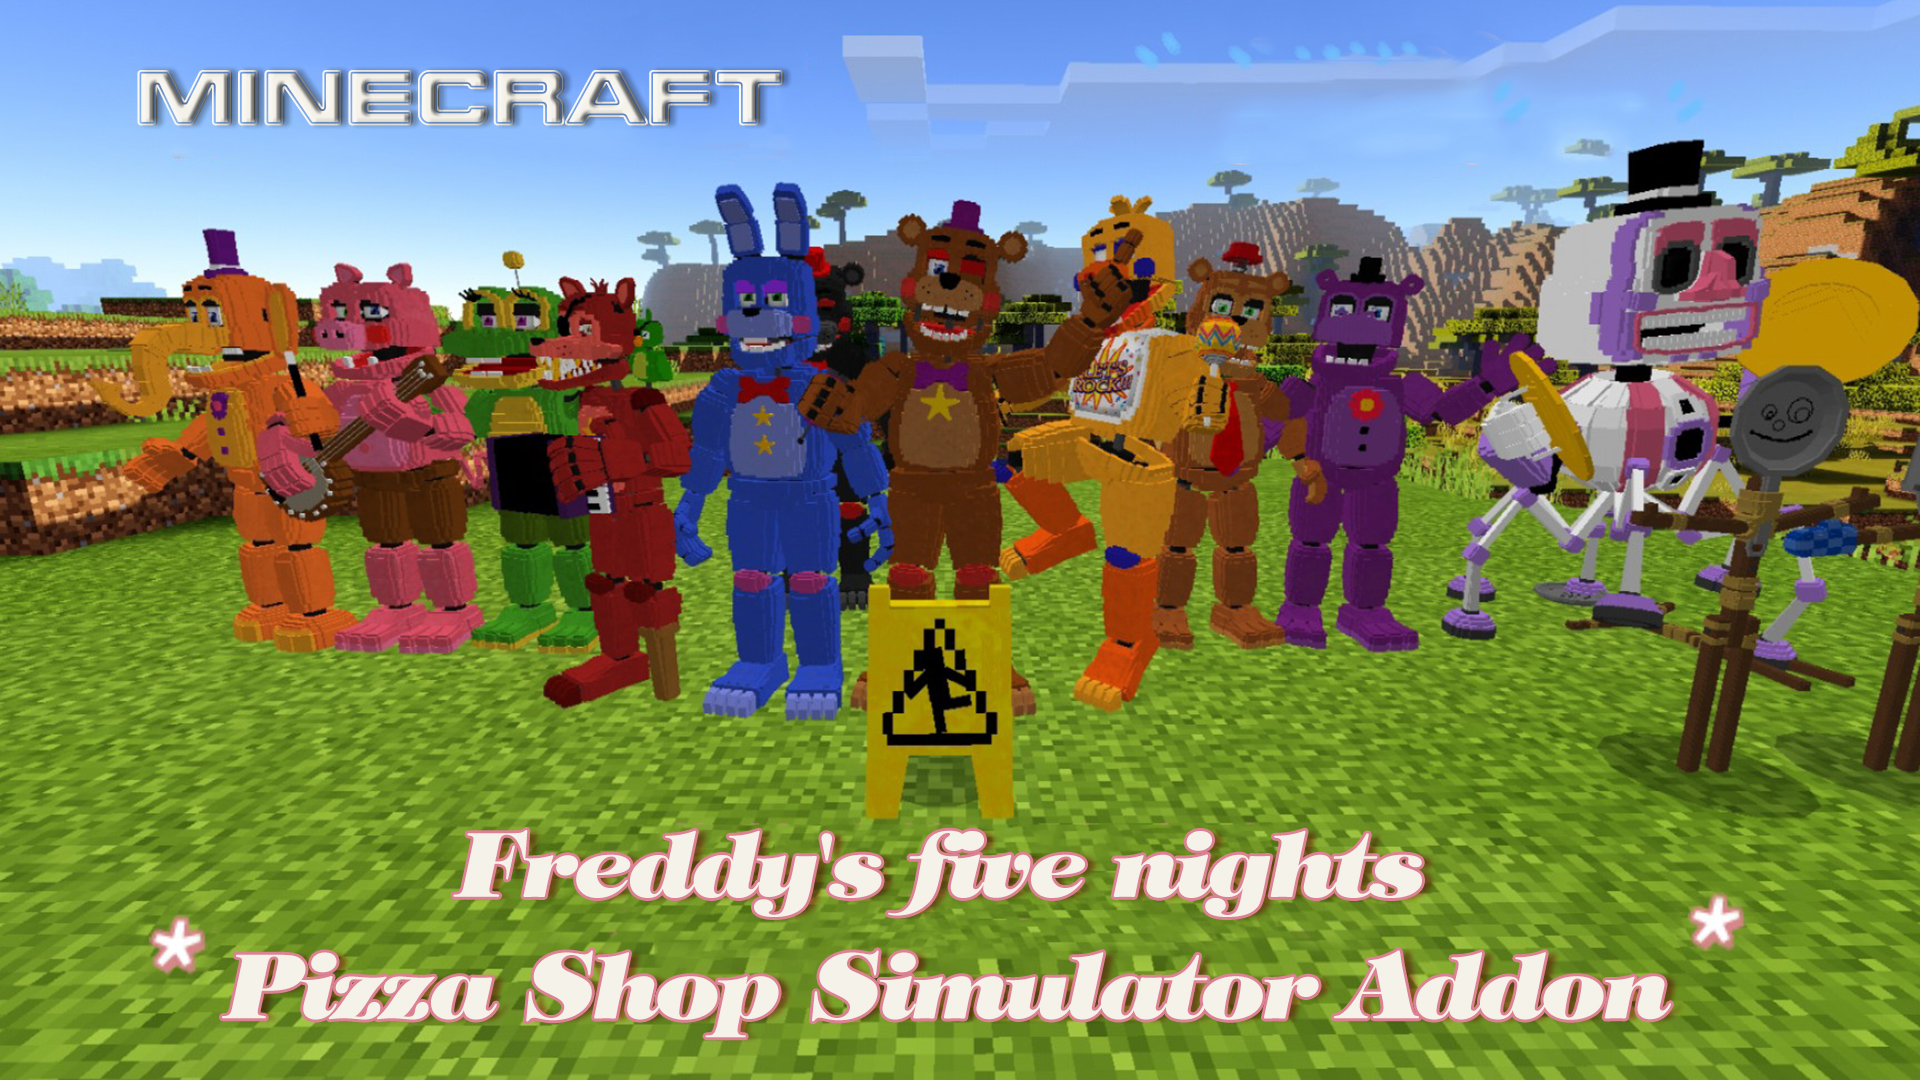 Animatronics FNAF 6 MOD - Freddy Fazbear's Pizzeria Simulator 